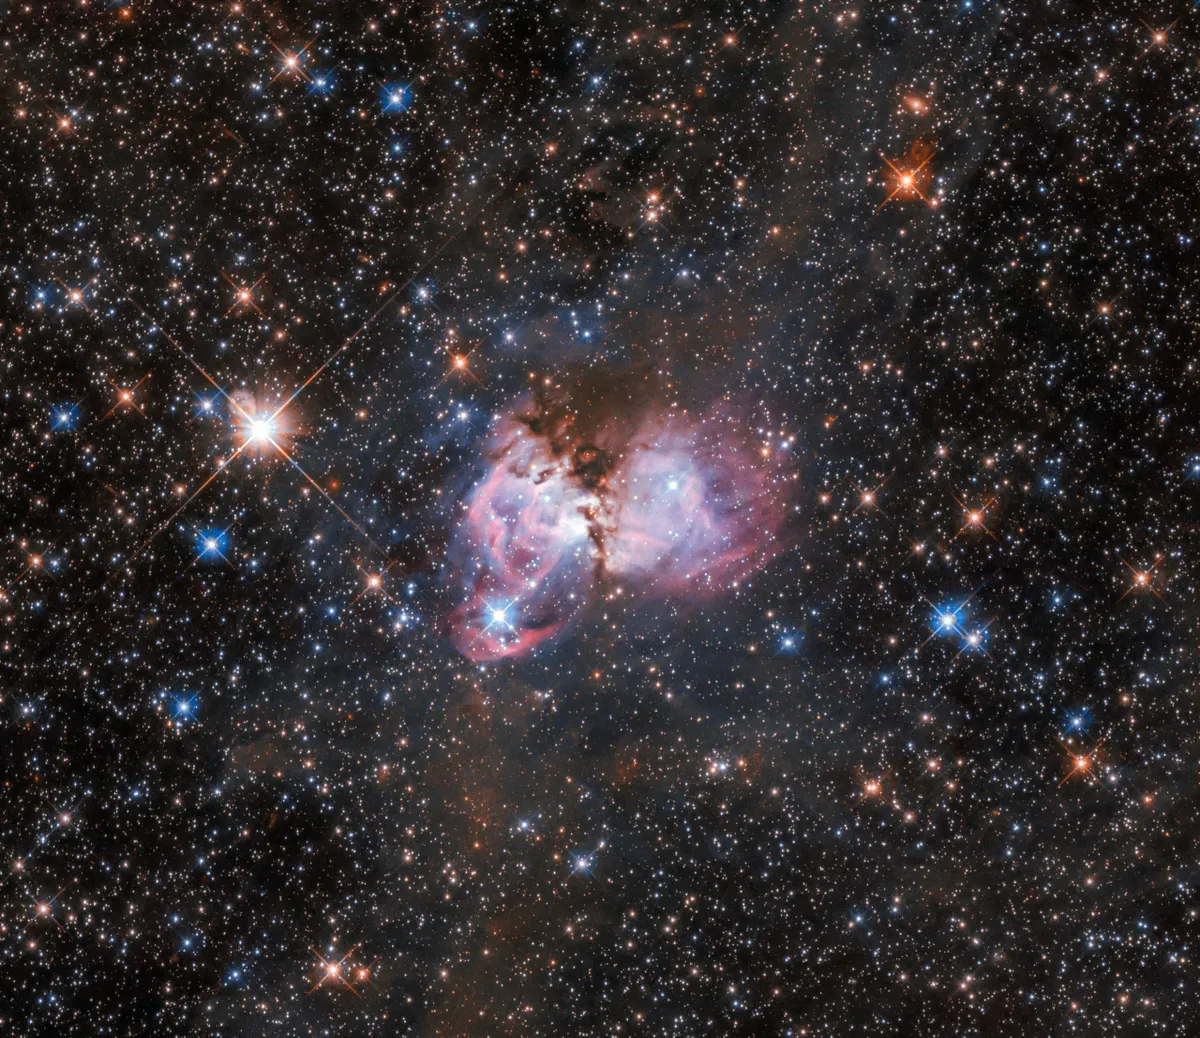 Super star cluster LHA 120-N150. Credit: ESA/Hubble/NASA/I. Stephens